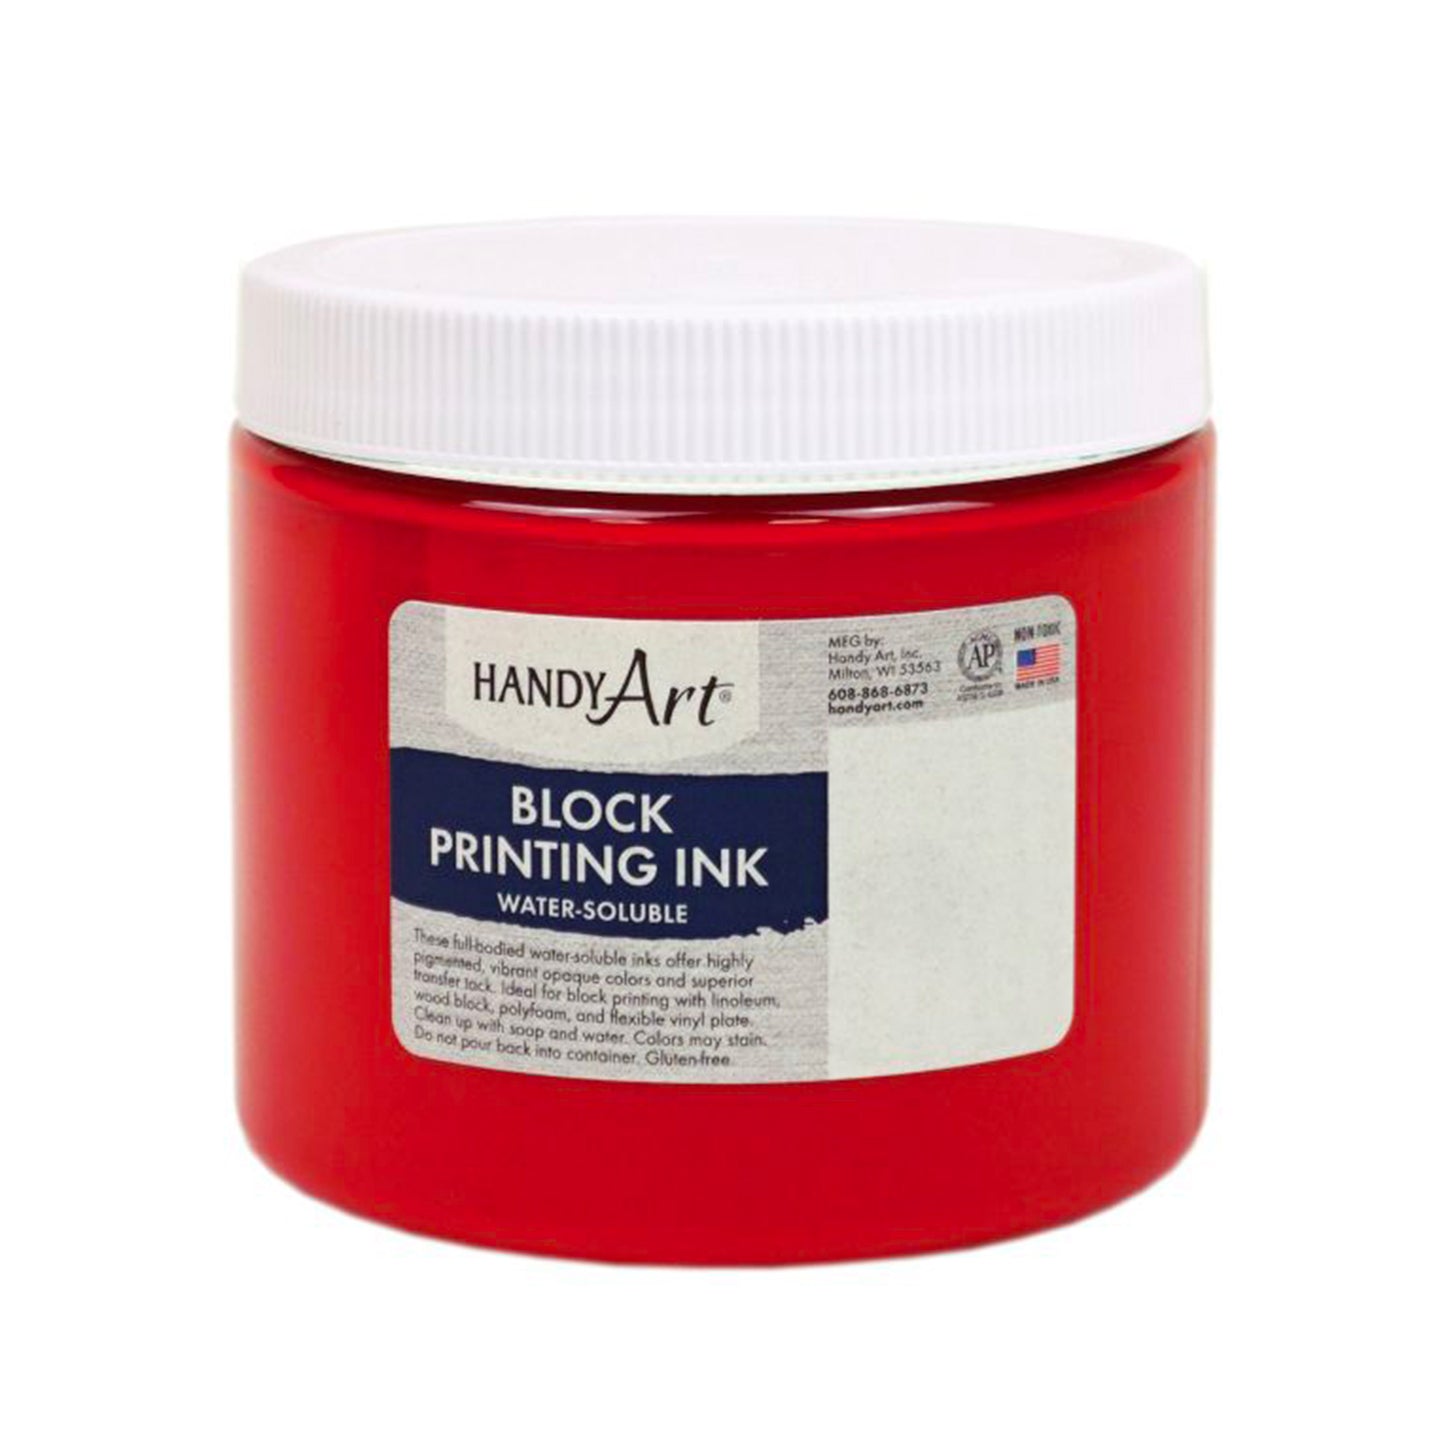 8 Oz. Handy Art Block Printing Ink